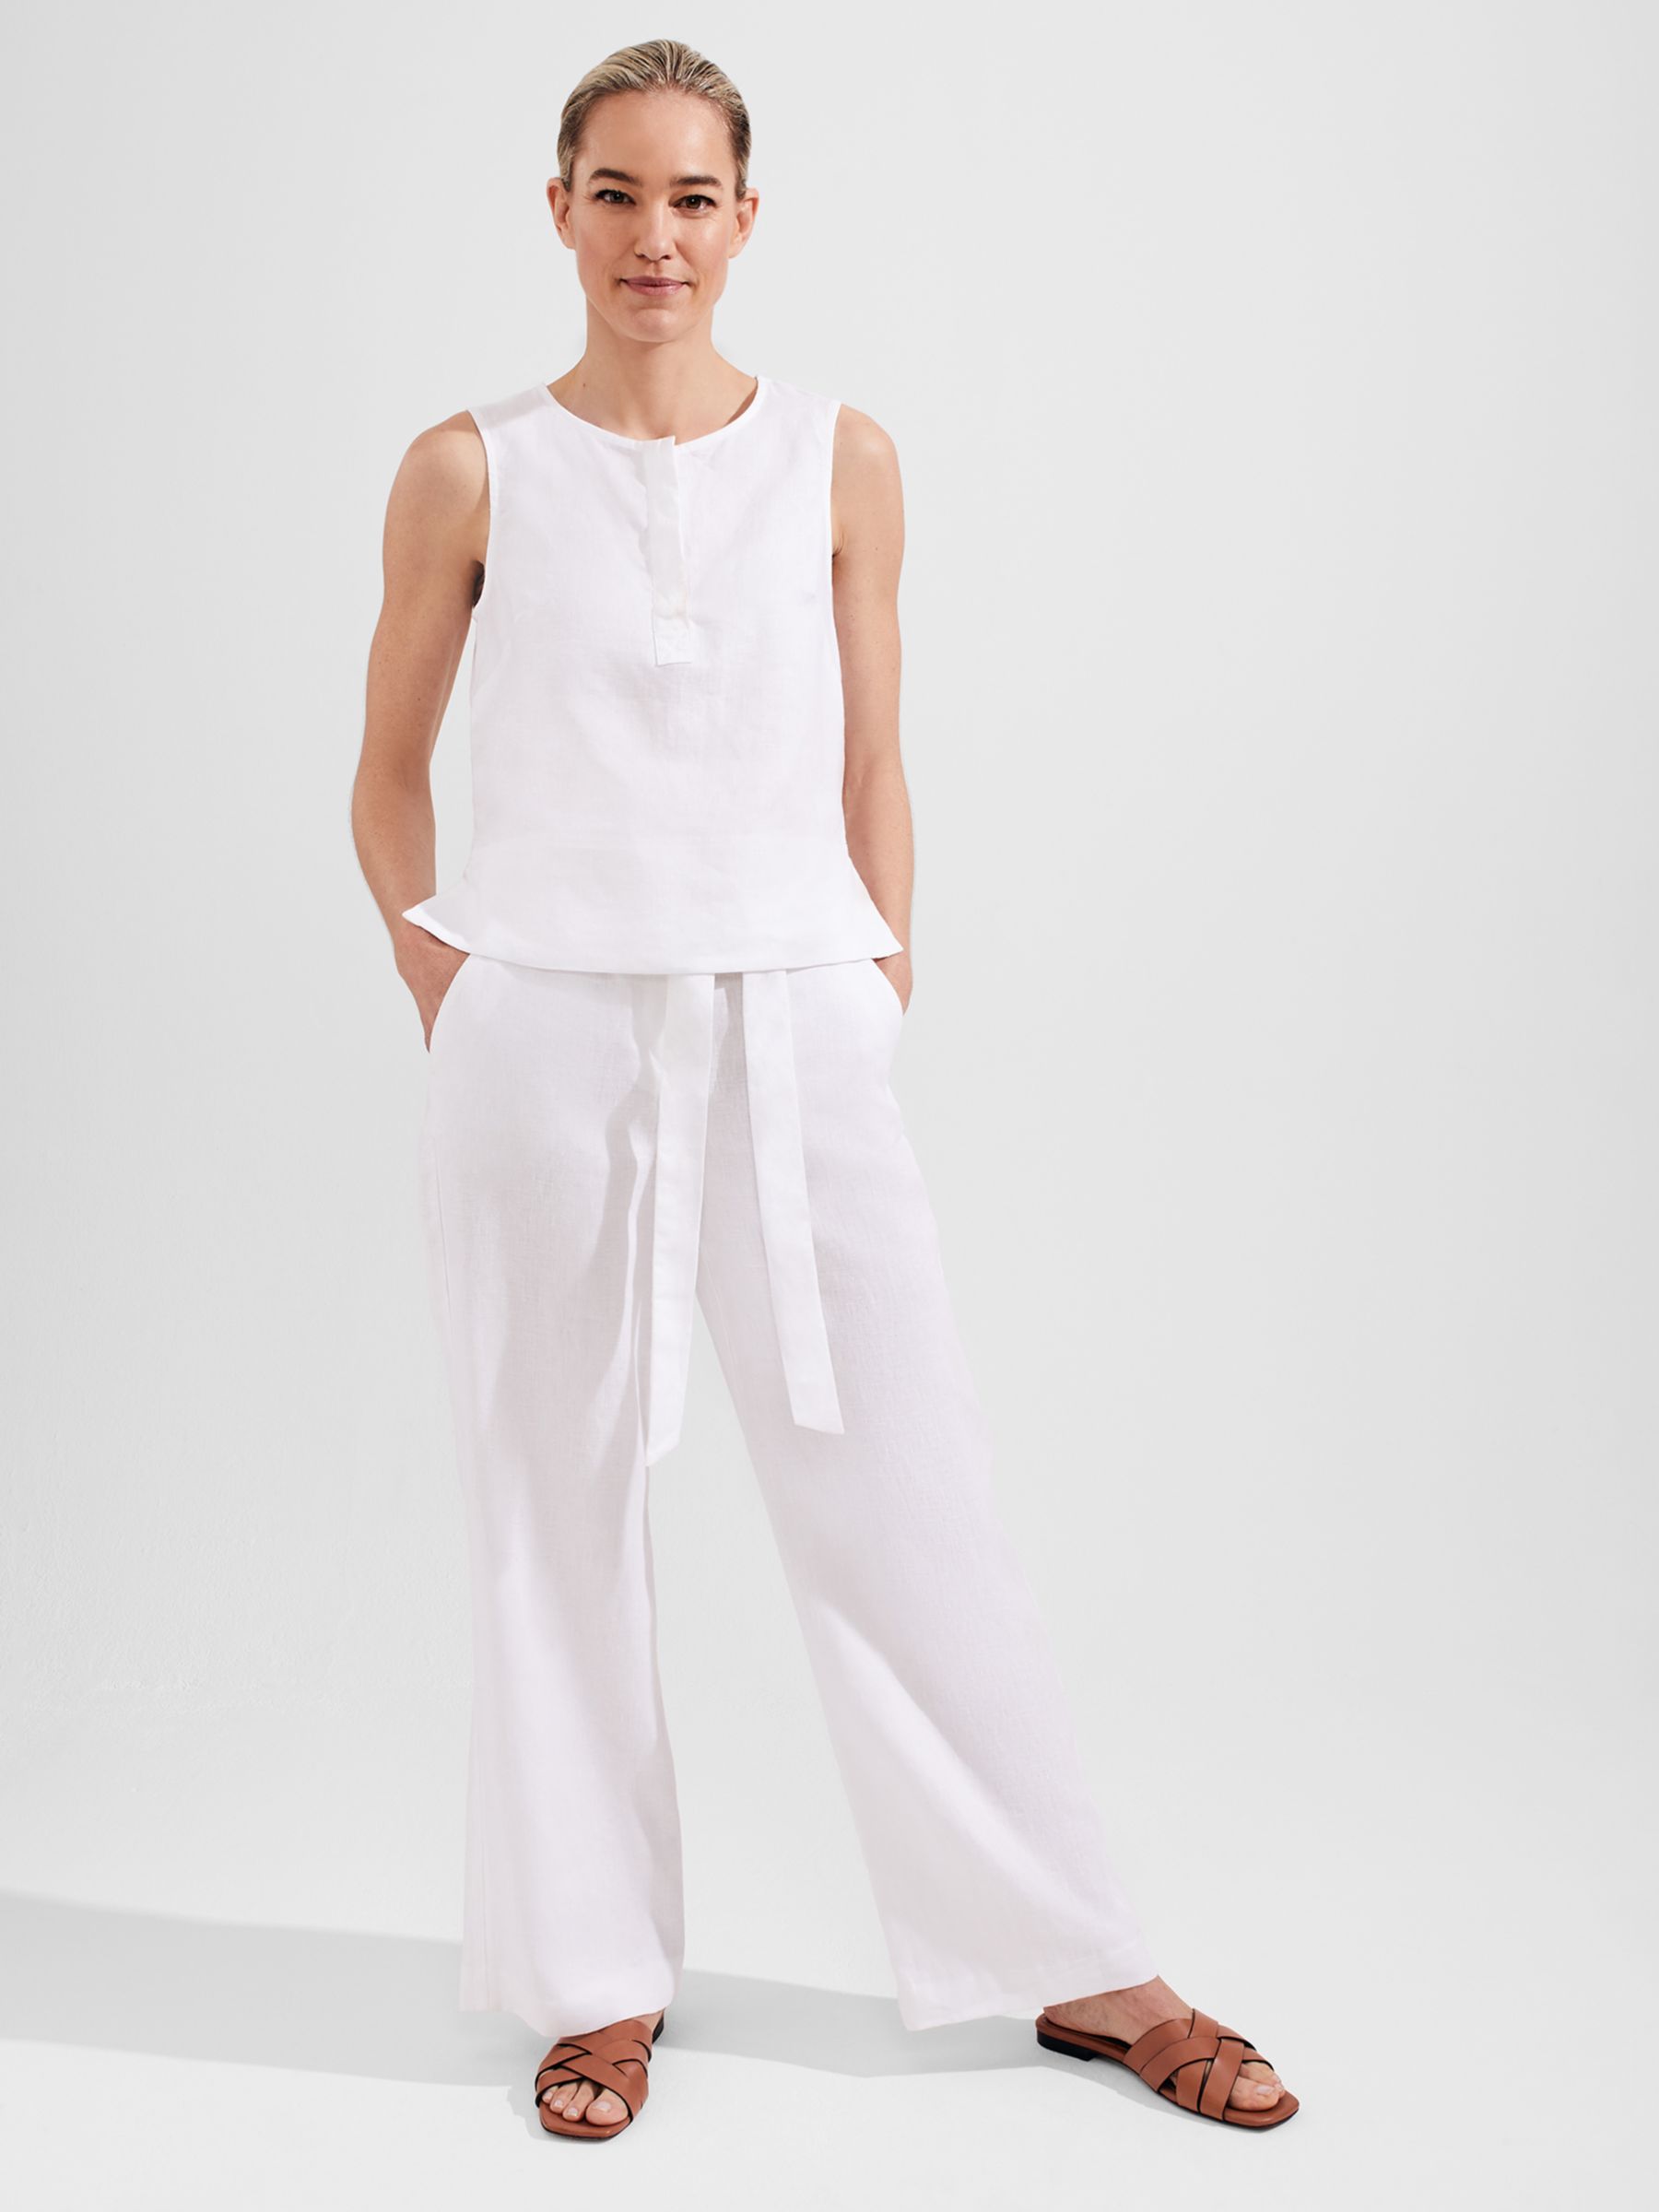 Hobbs Jacqui Linen Trousers, White, 6